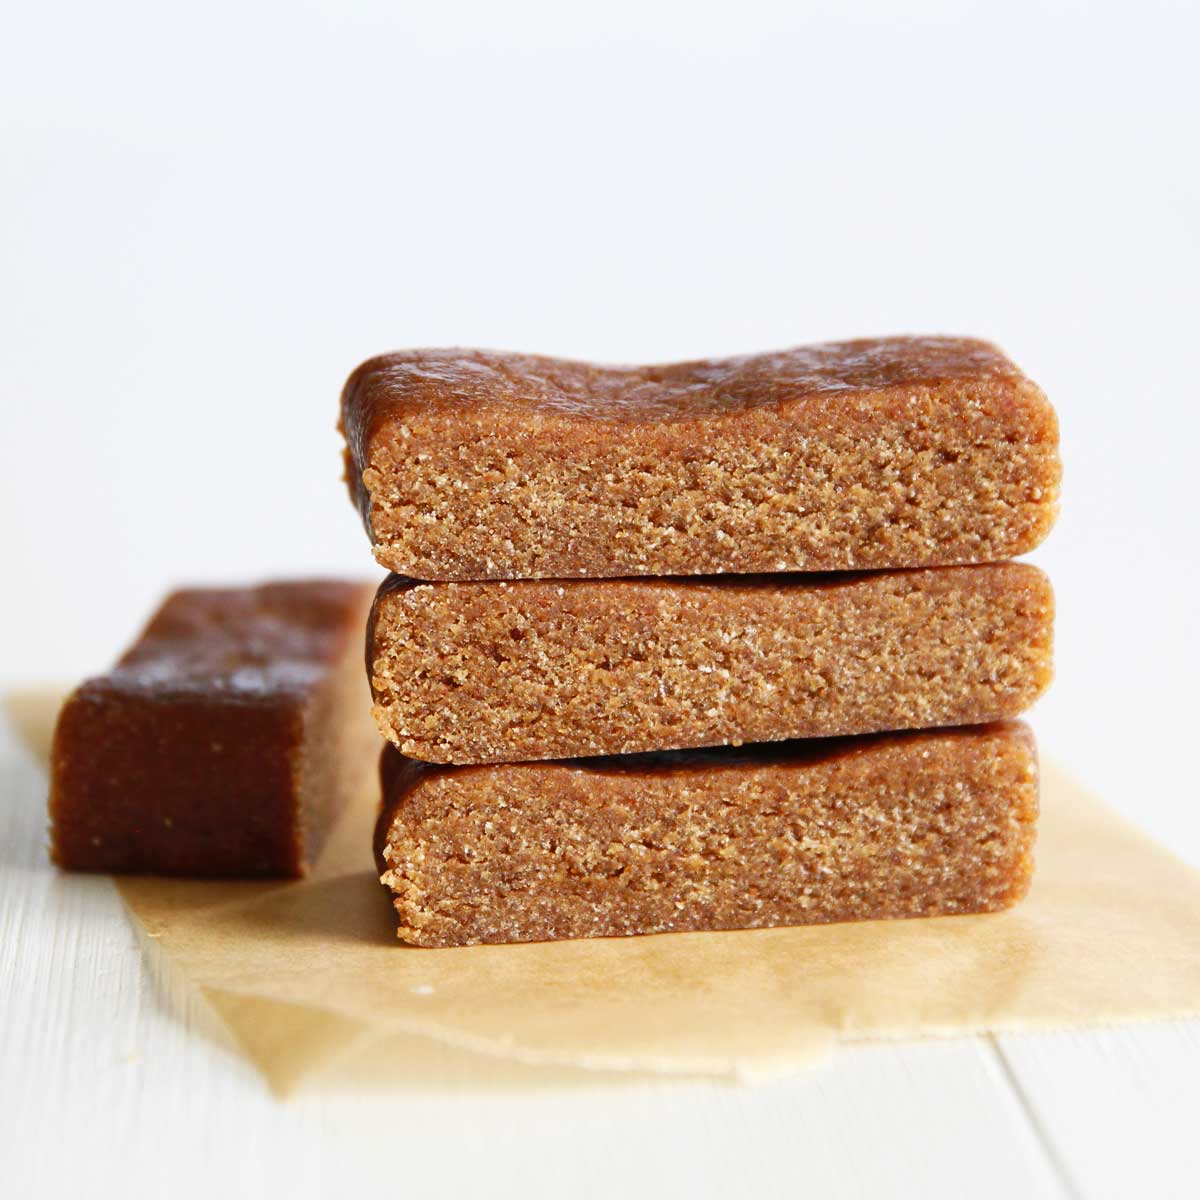 Gingerbread Collagen Protein Bars: a Healthier Festive Snack - Nutella Protein Bars